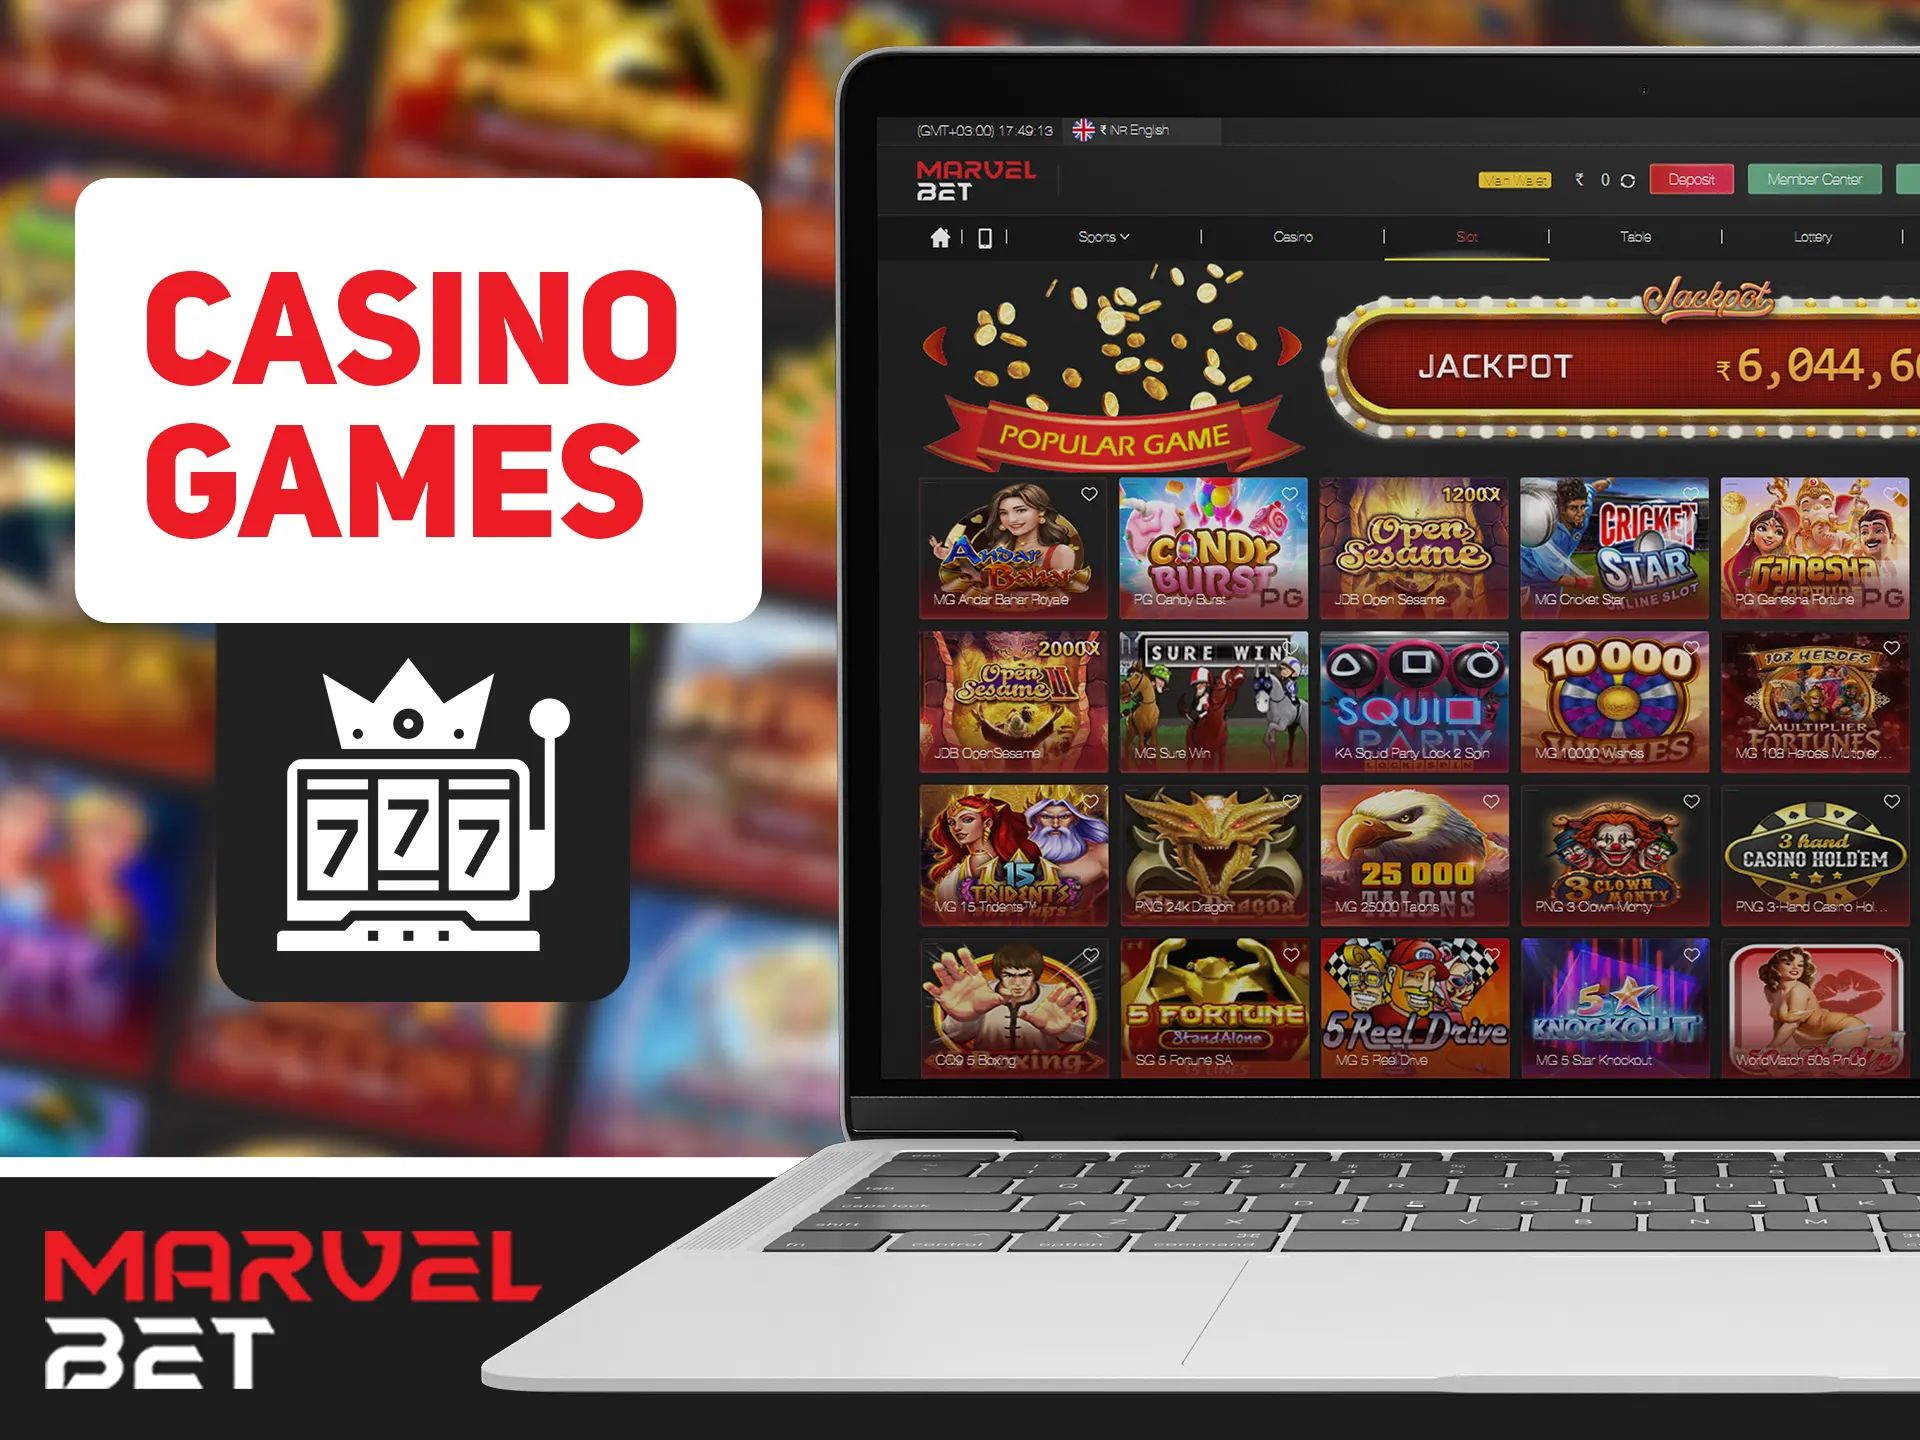 Search for your favourite casino games in Marvelbet casino,